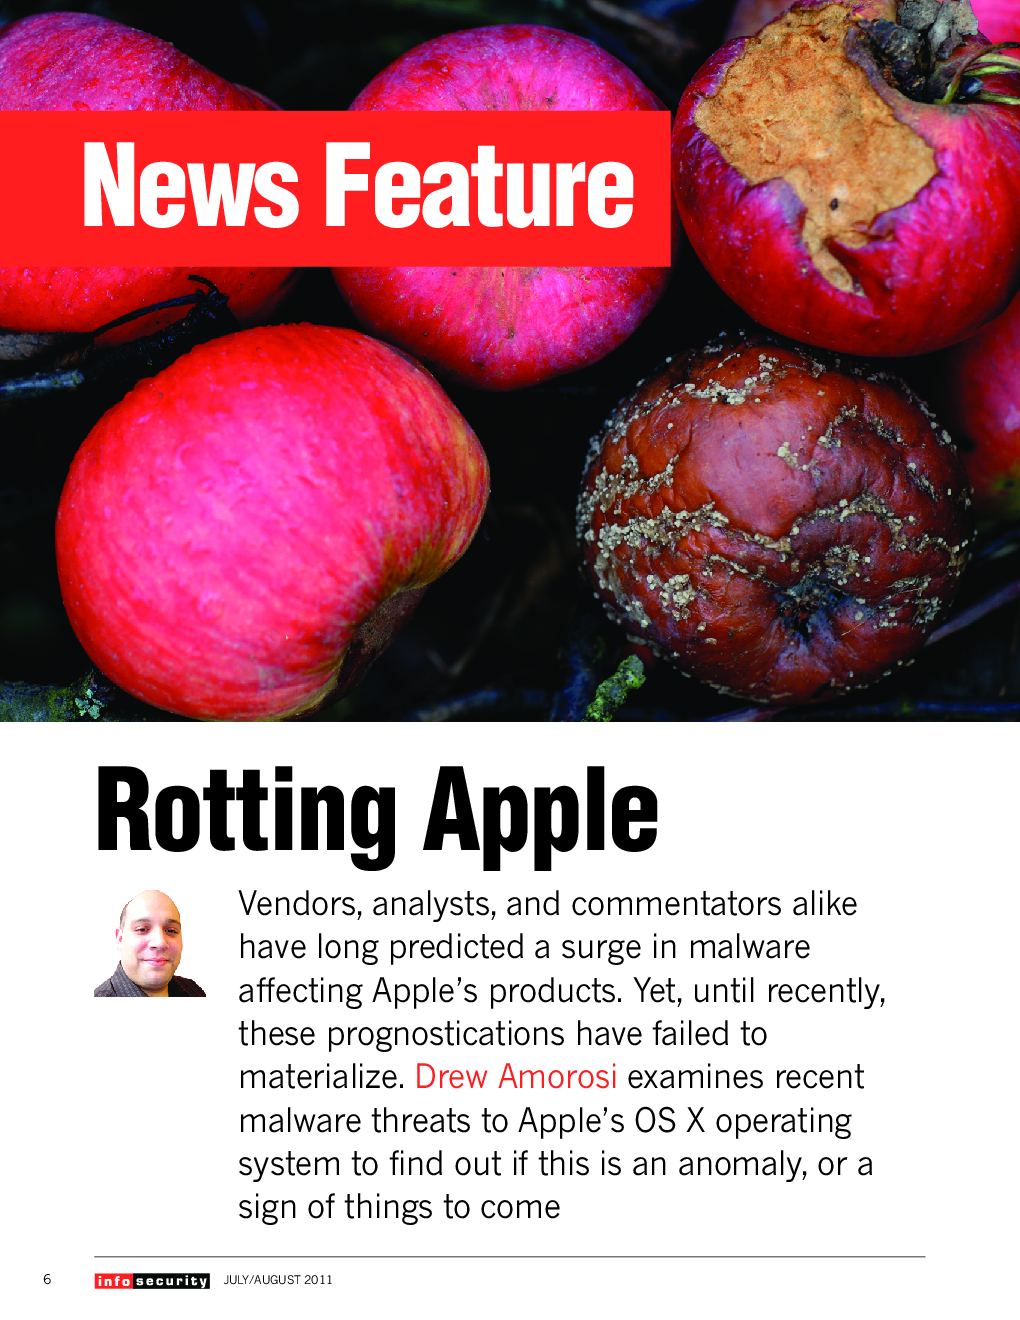 Rotting Apple